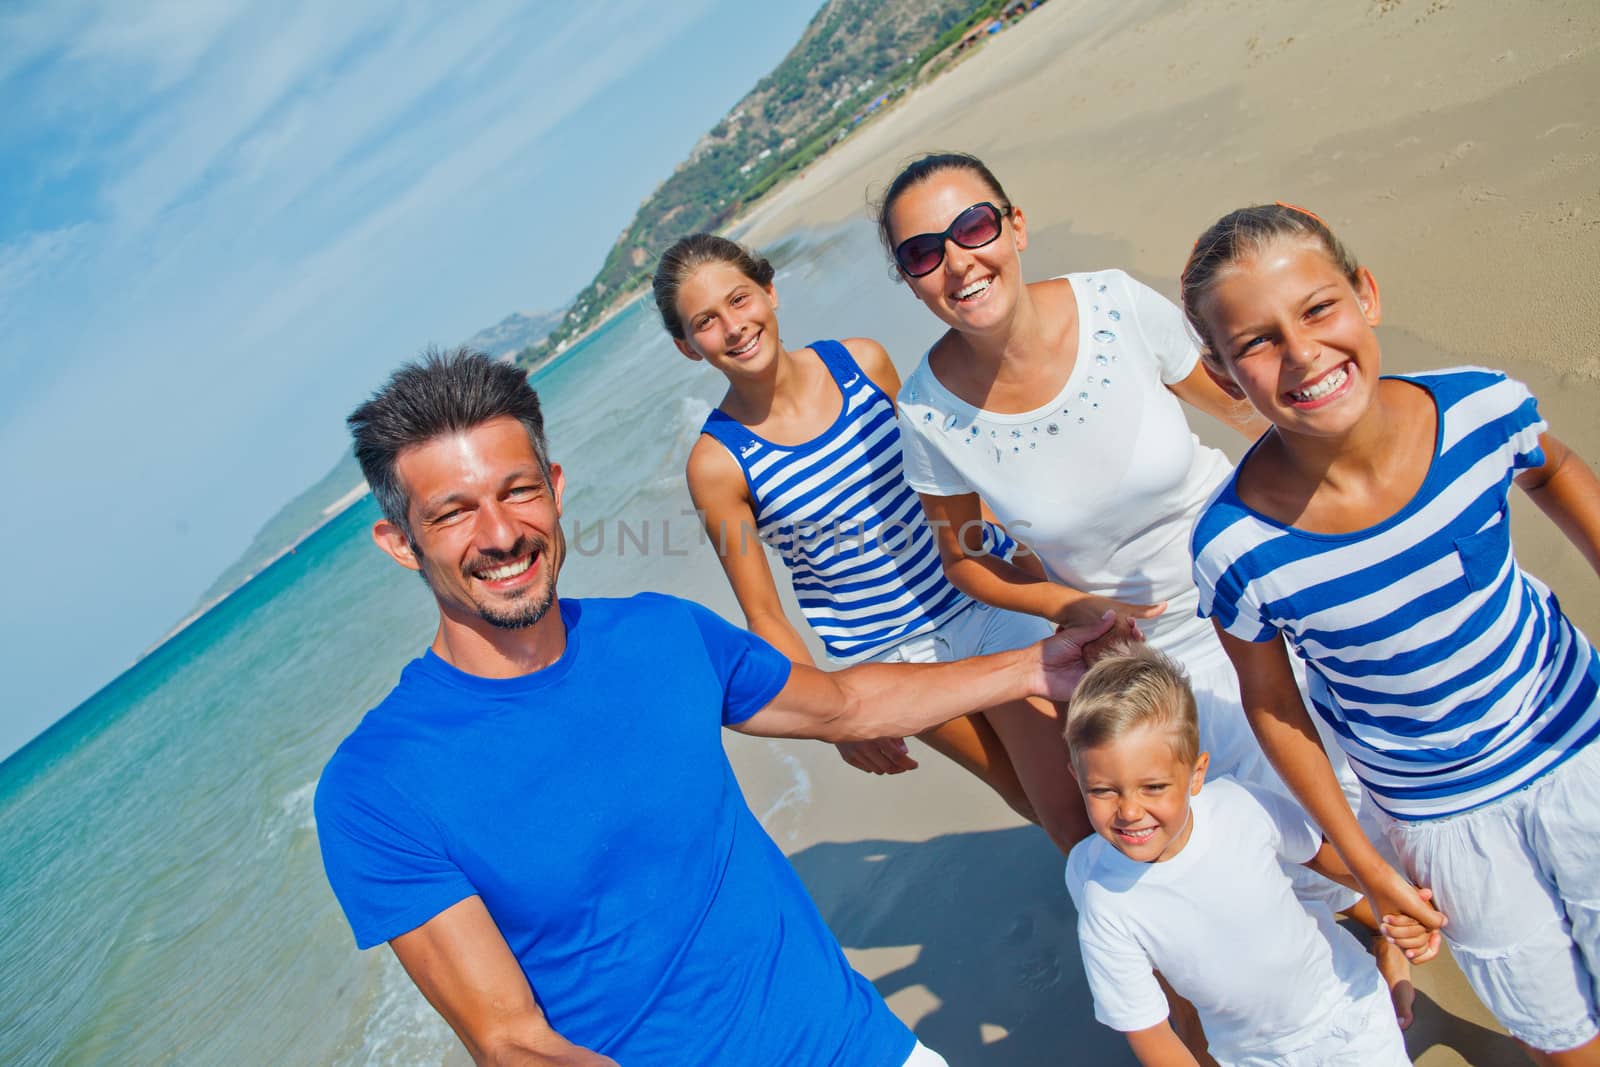 Family having fun on beach by maxoliki